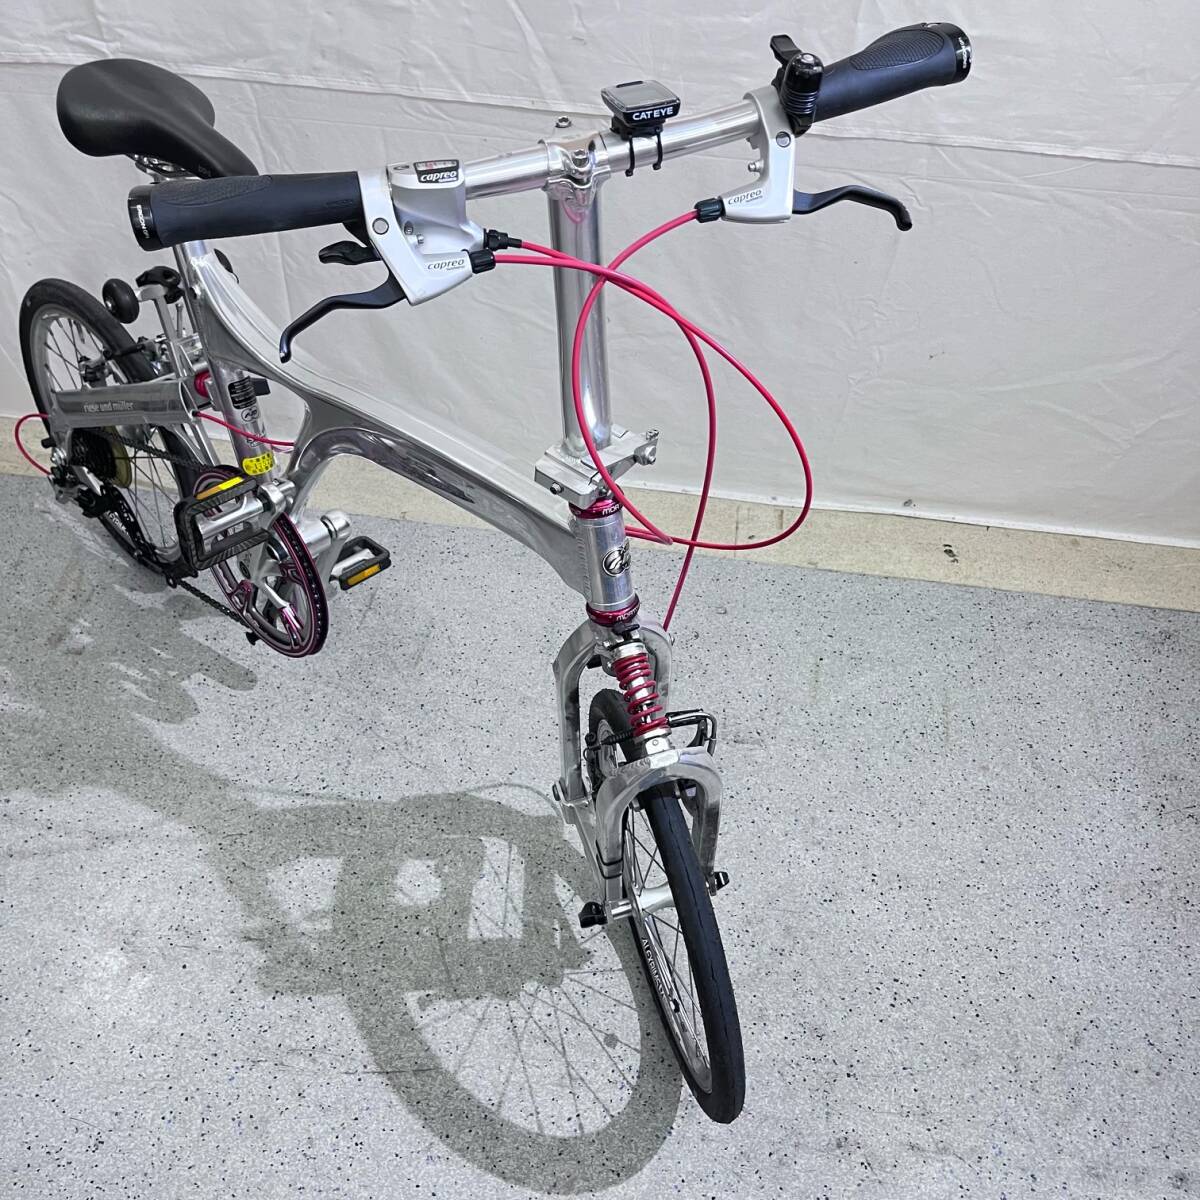 R&Mlaiz and Mueller BD-1 9 speed ka Pleo aluminium frame foldable bicycle mini bicycle 